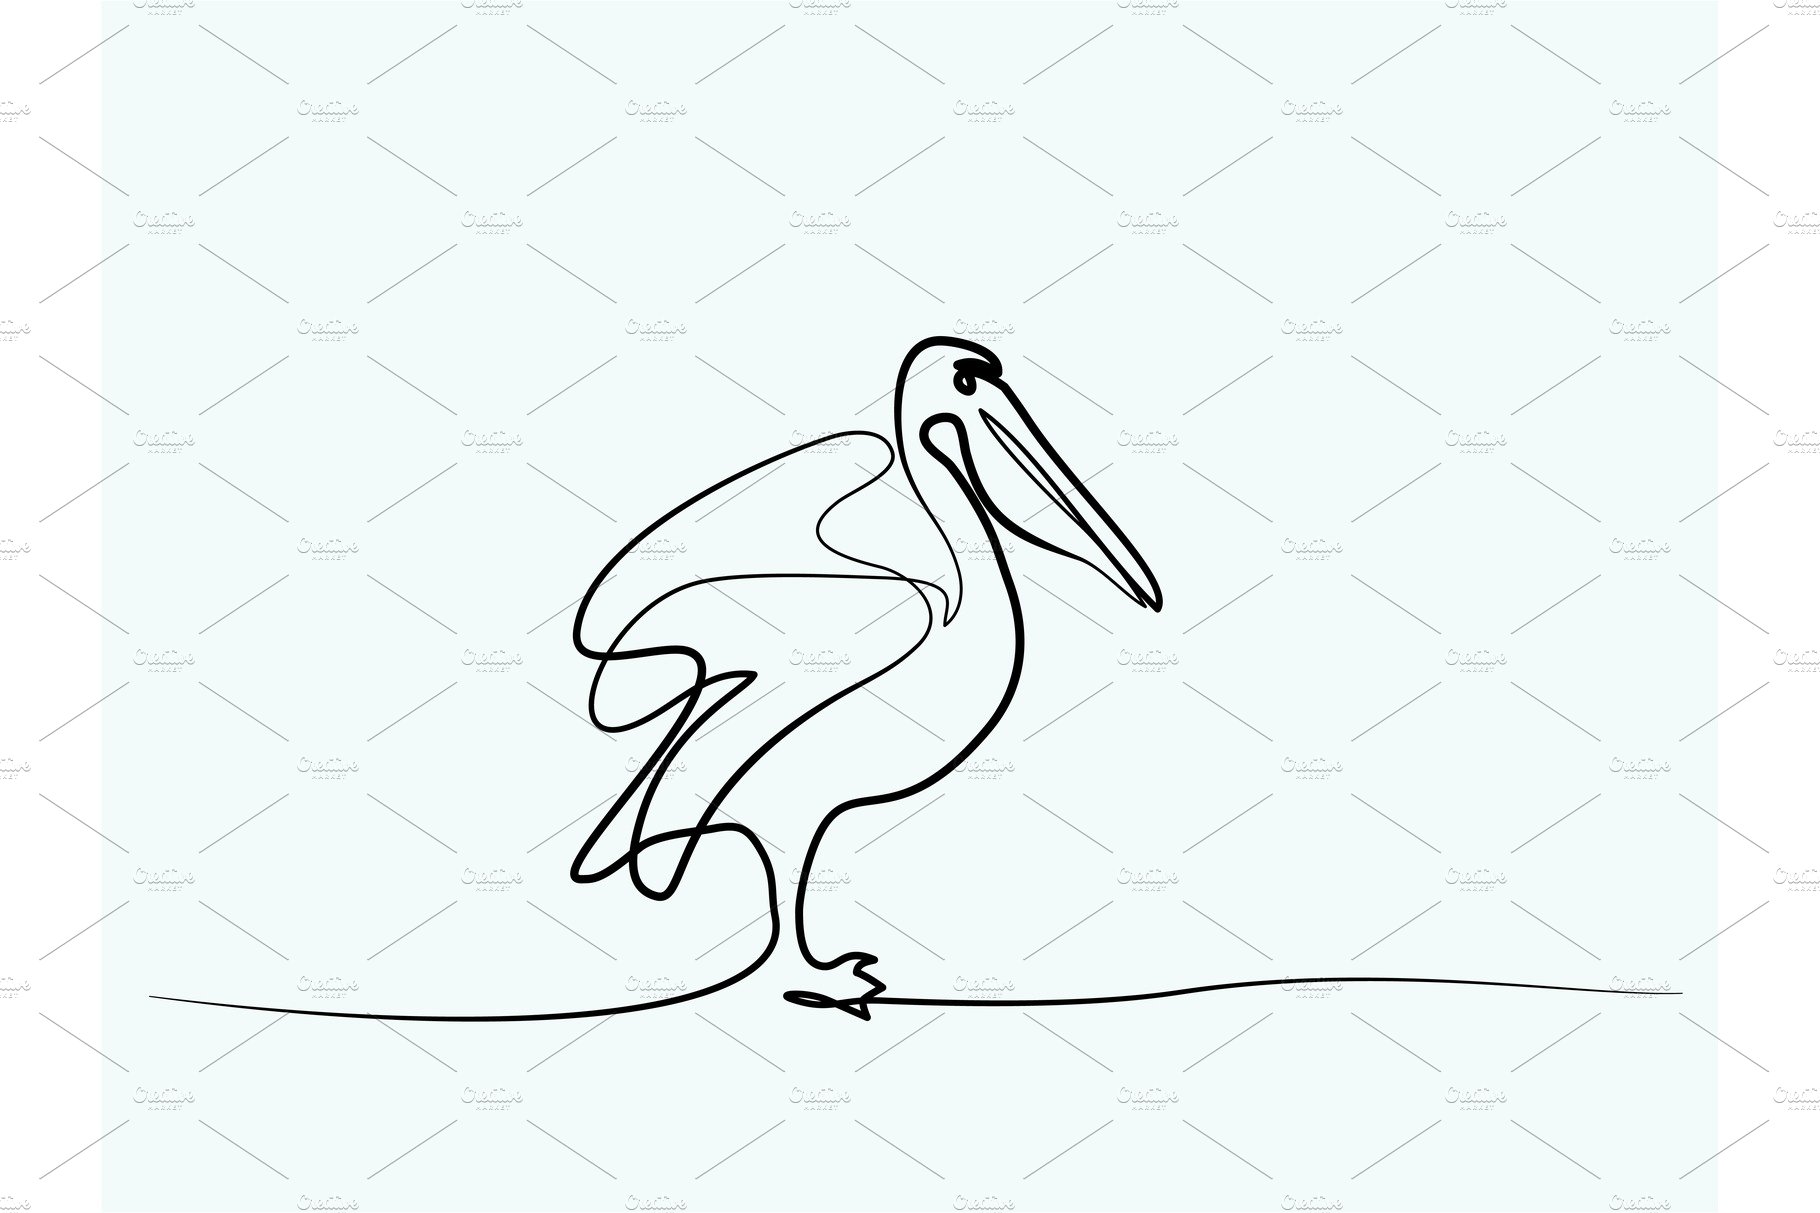 Pelican minimalist symbol cover image.